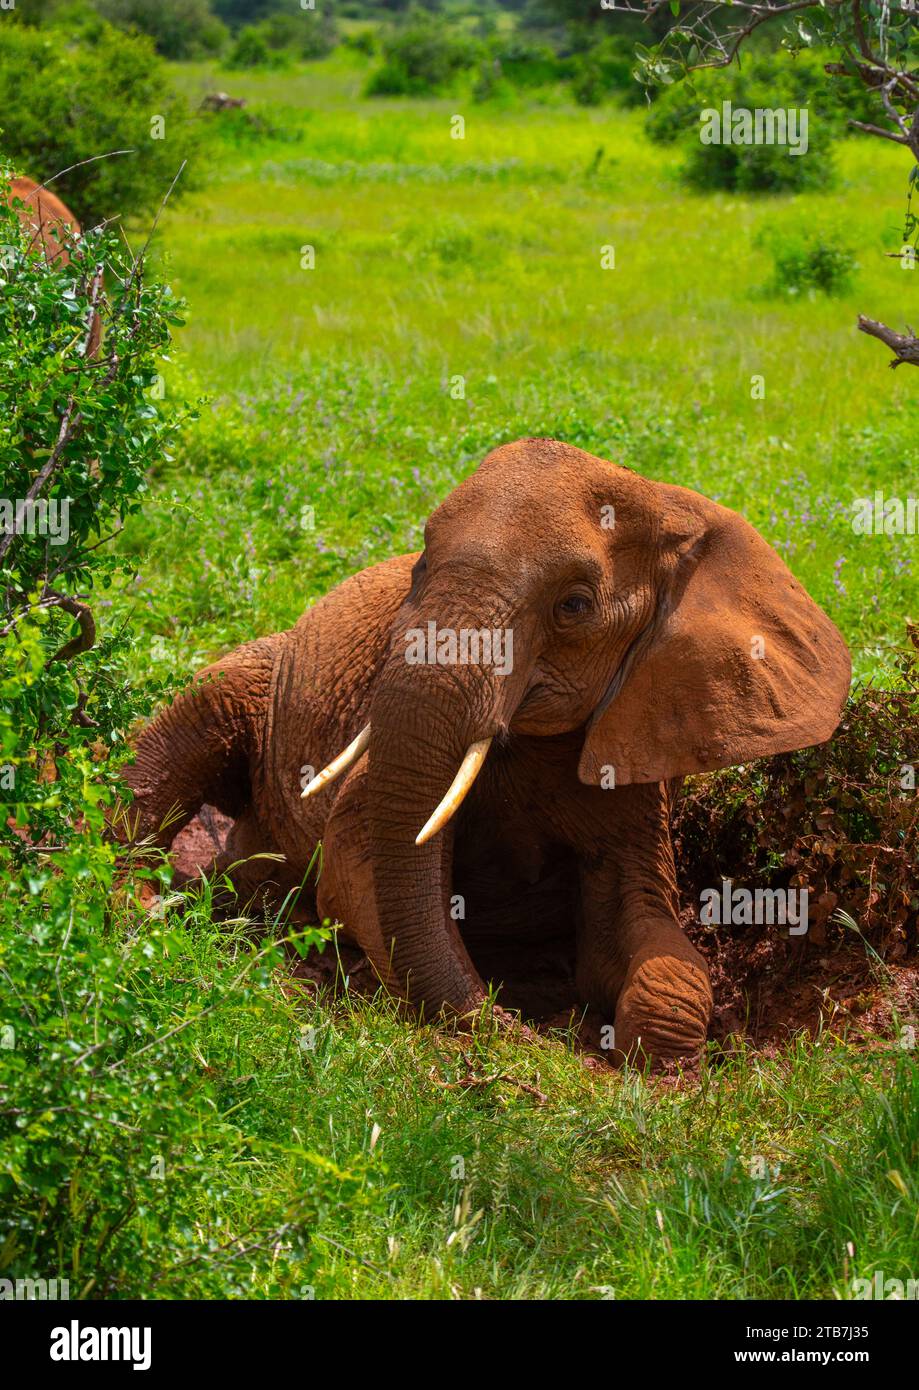 Elefante en el barro, Condado de Samburu, Reserva Nacional de Samburu, Kenia Foto de stock